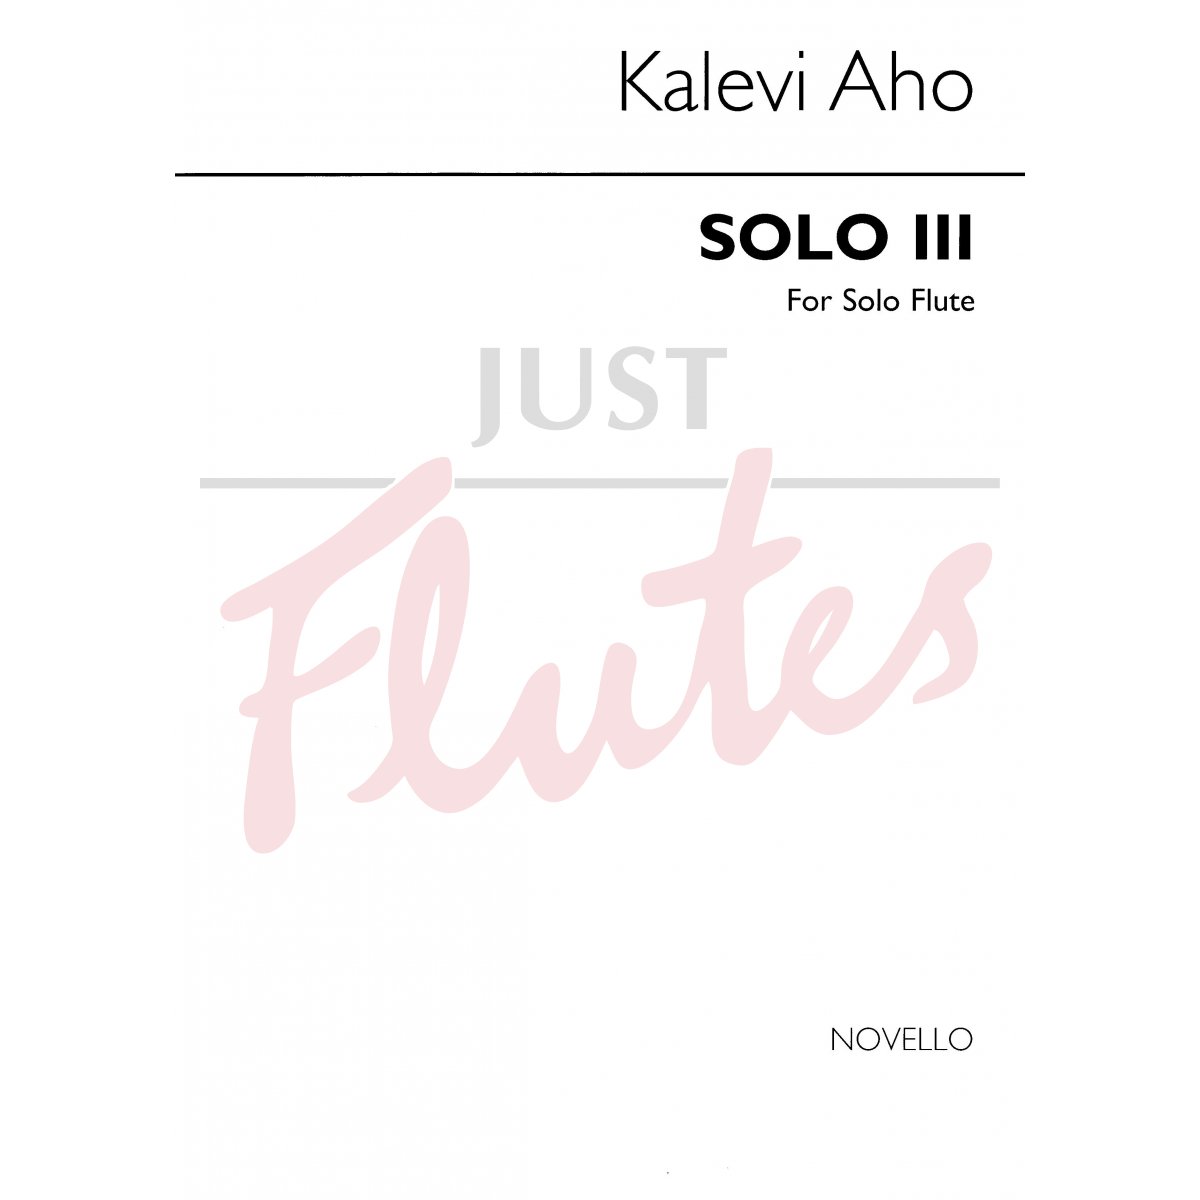 Solo III for Solo Flute